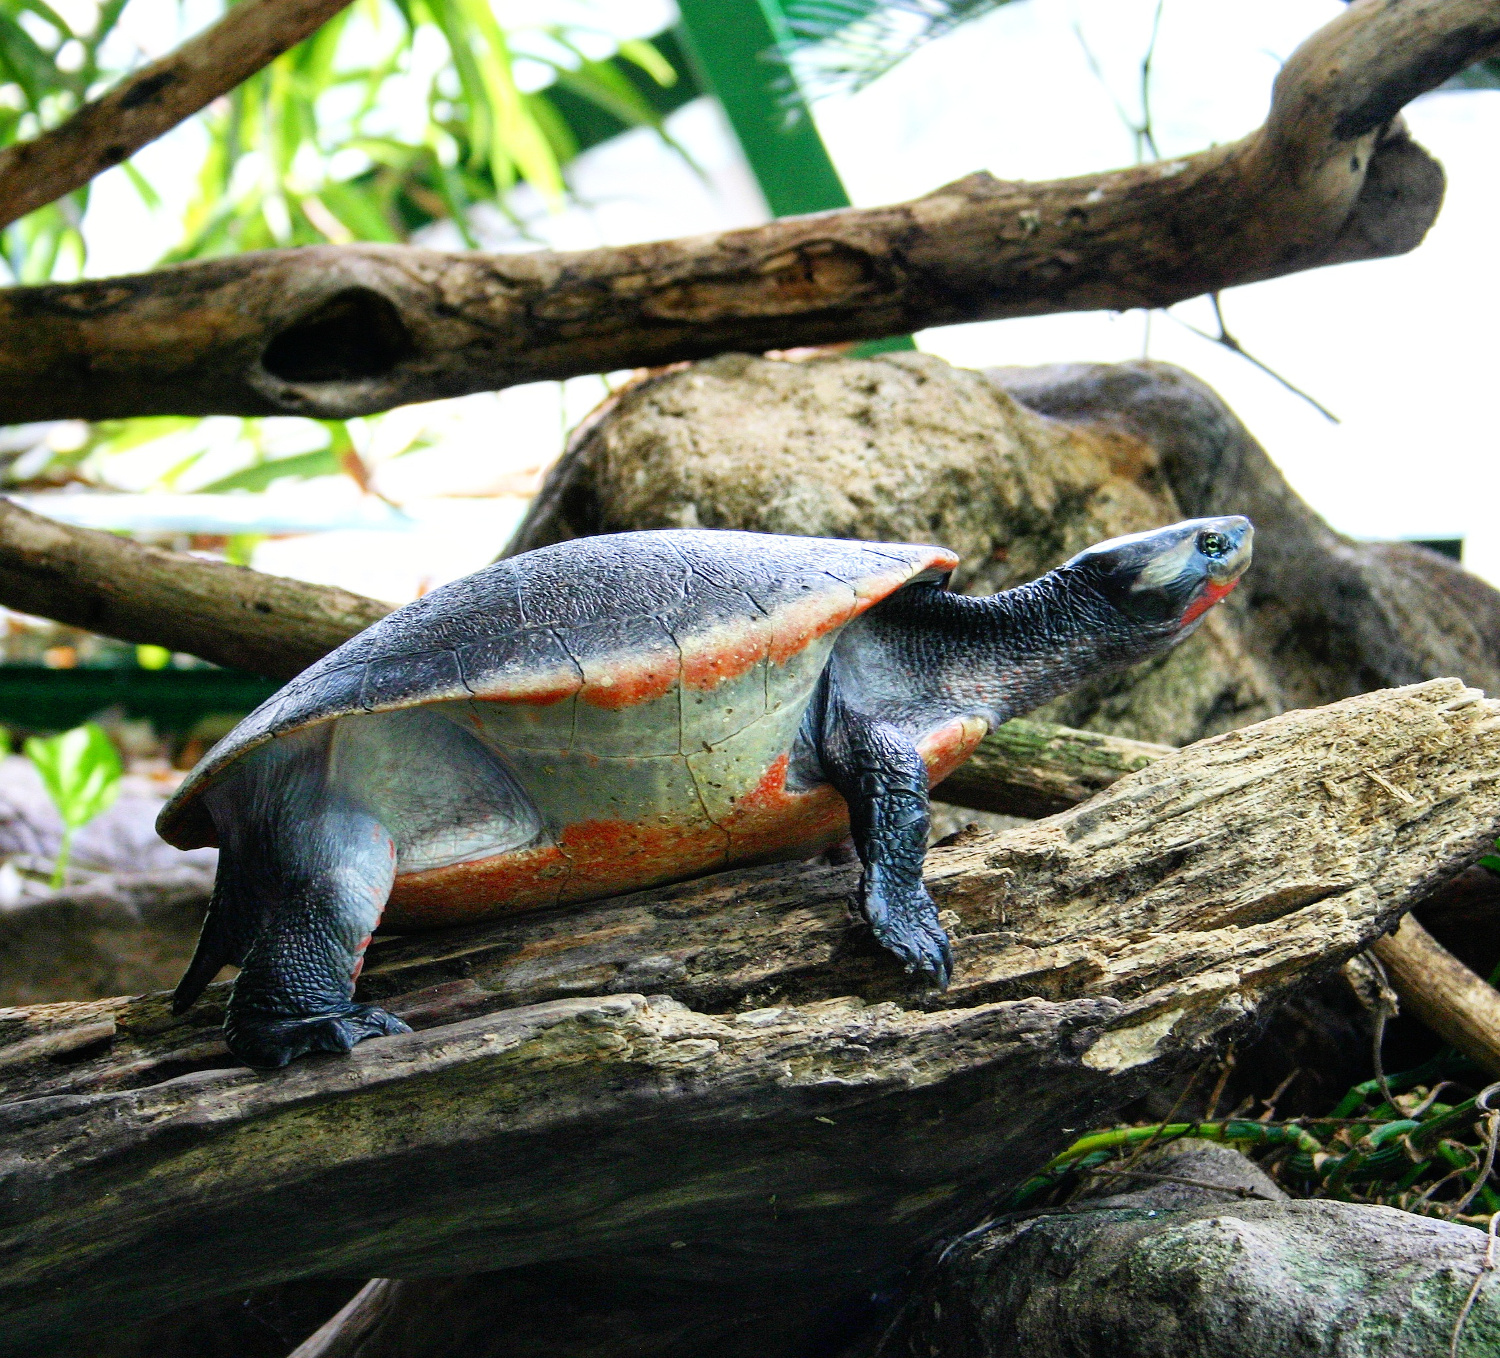 Aqua Terra Zoo in Vienna - Haus des Meeres - turtle